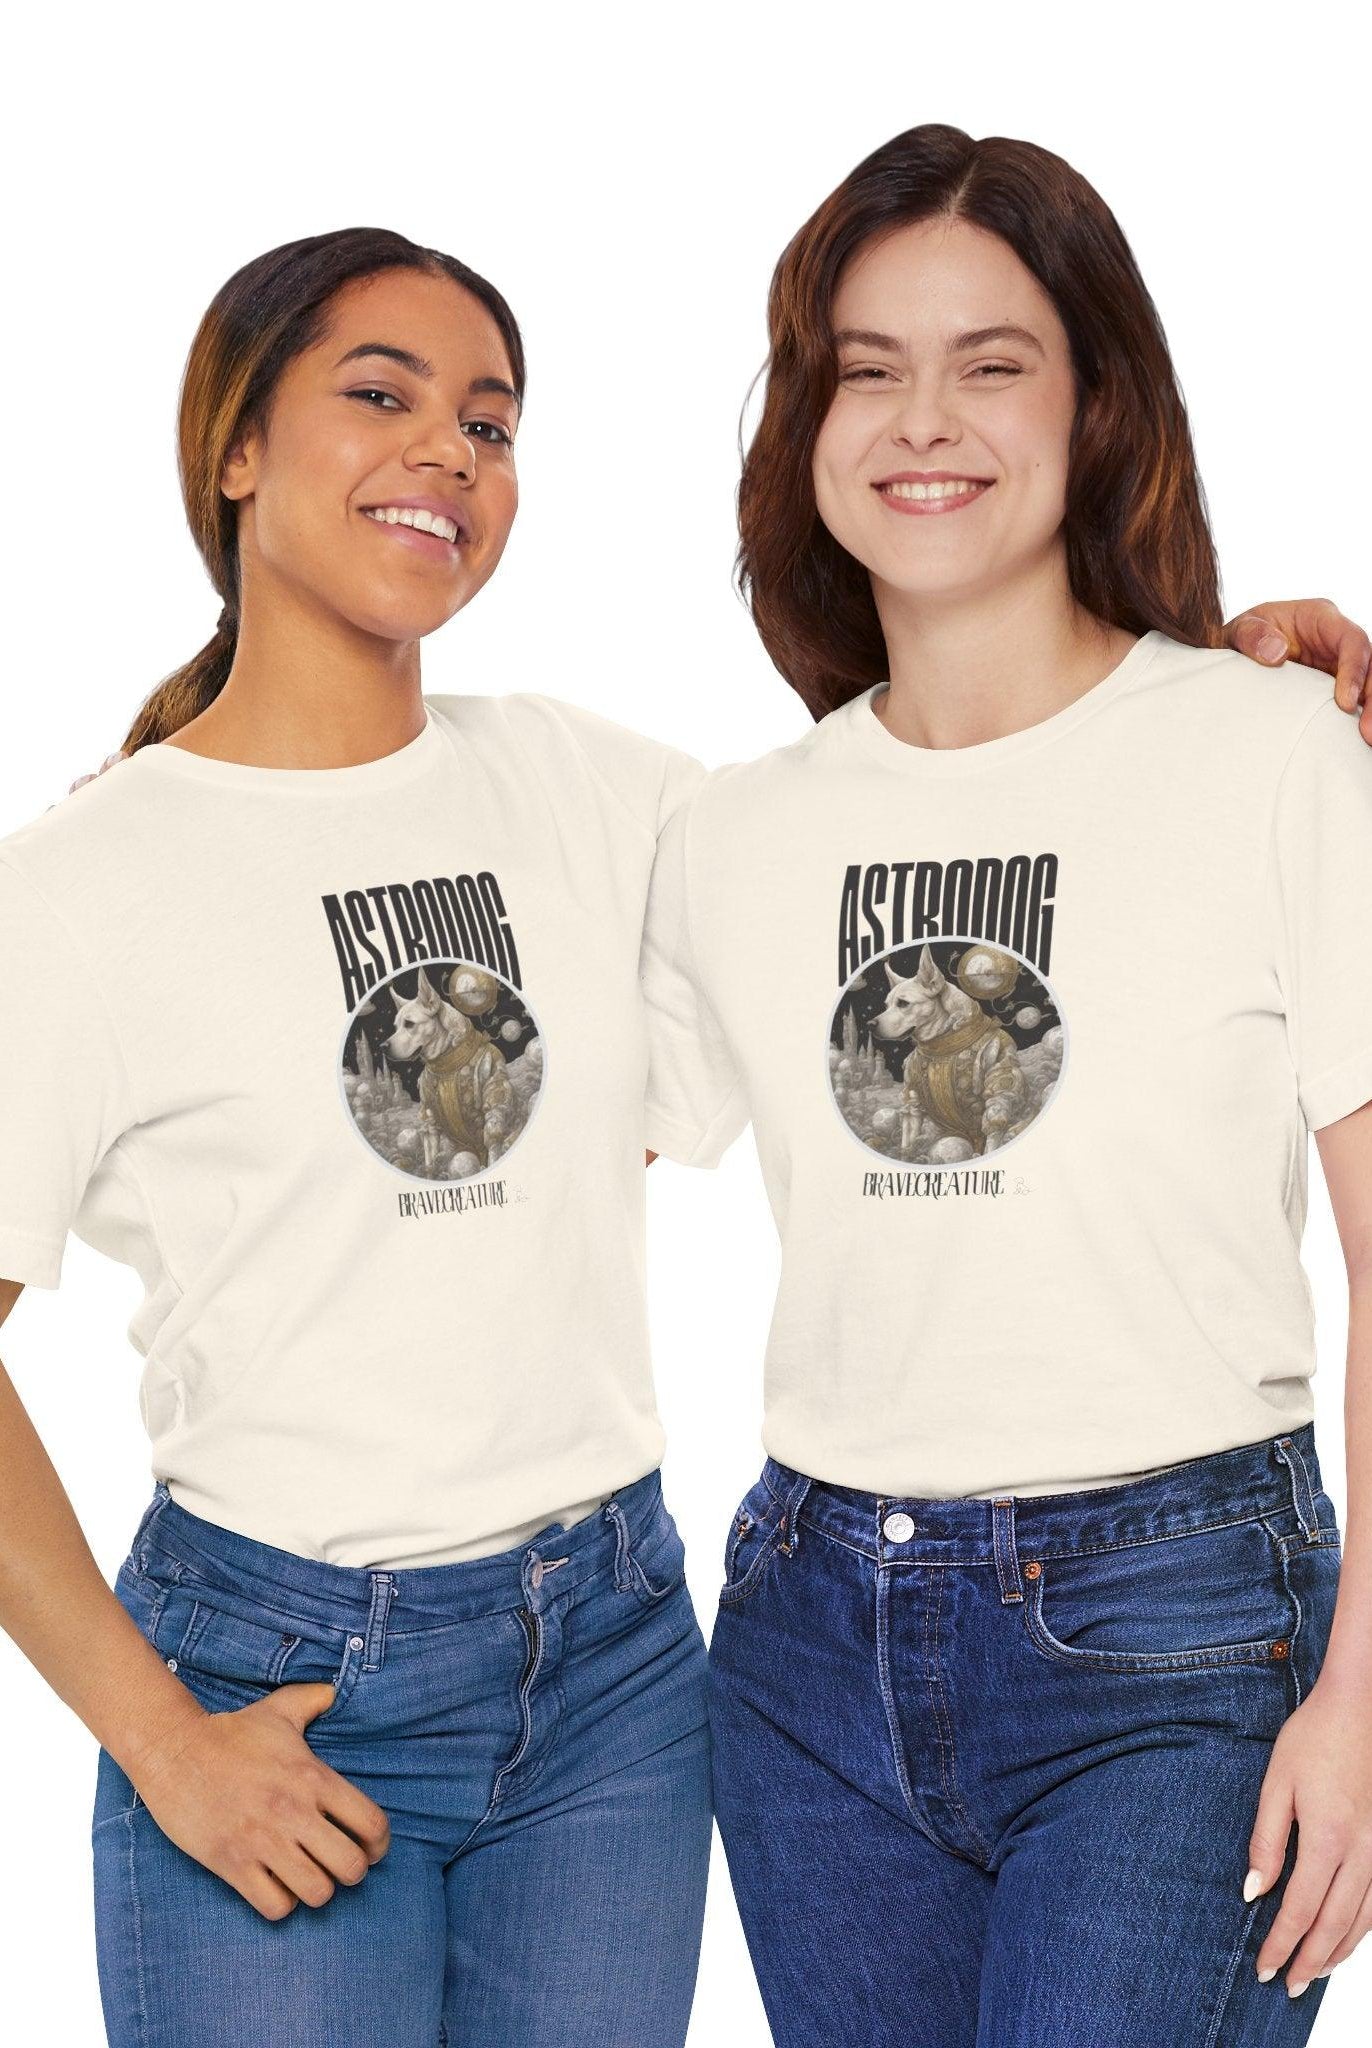 Astrodog - Astronaut - Soulshinecreators - Unisex Jersey Short Sleeve Tee - US - Soulshinecreators